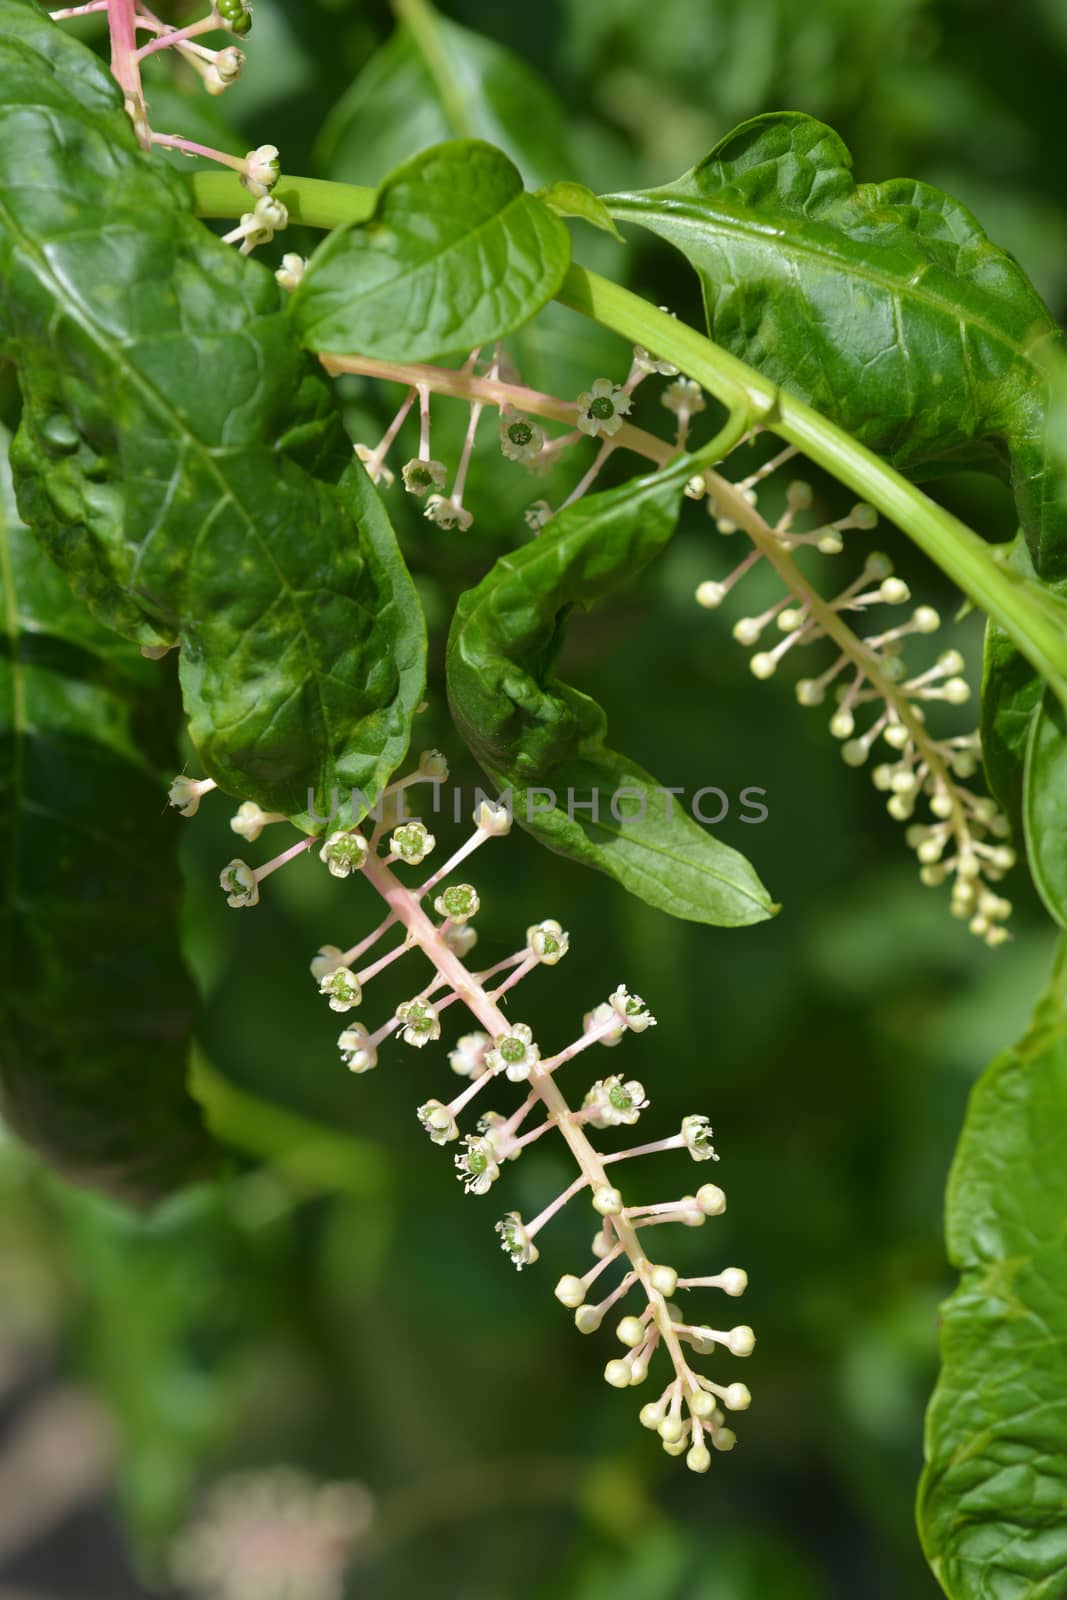 American pokeweed - Latin name - Phytolacca americana